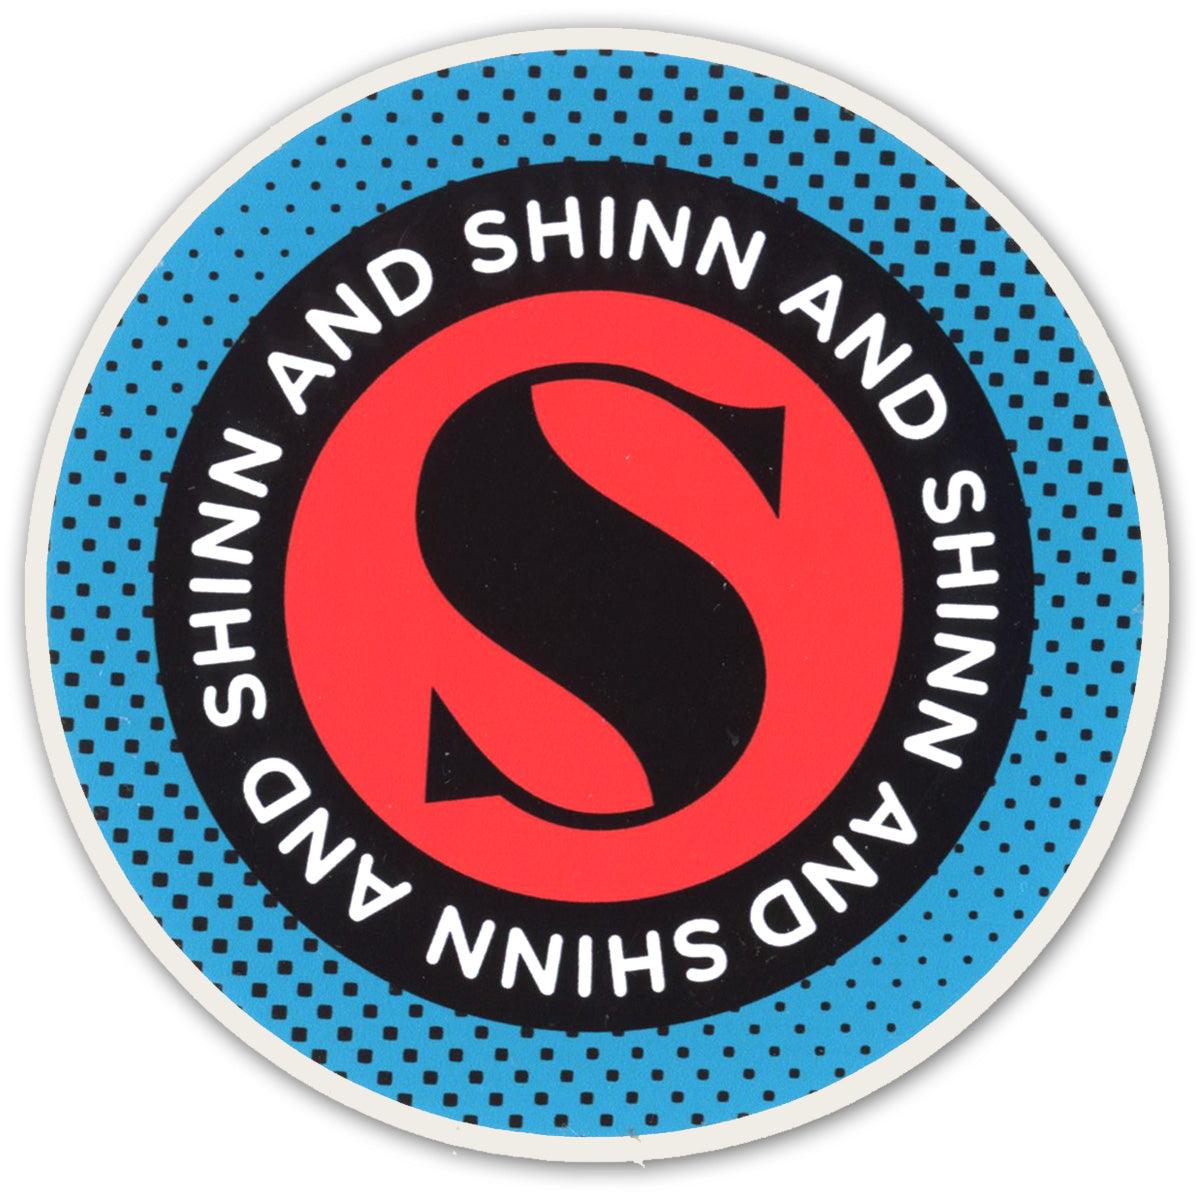 Shinn Kiteboarding Initial Sticker - Kiteshop.com